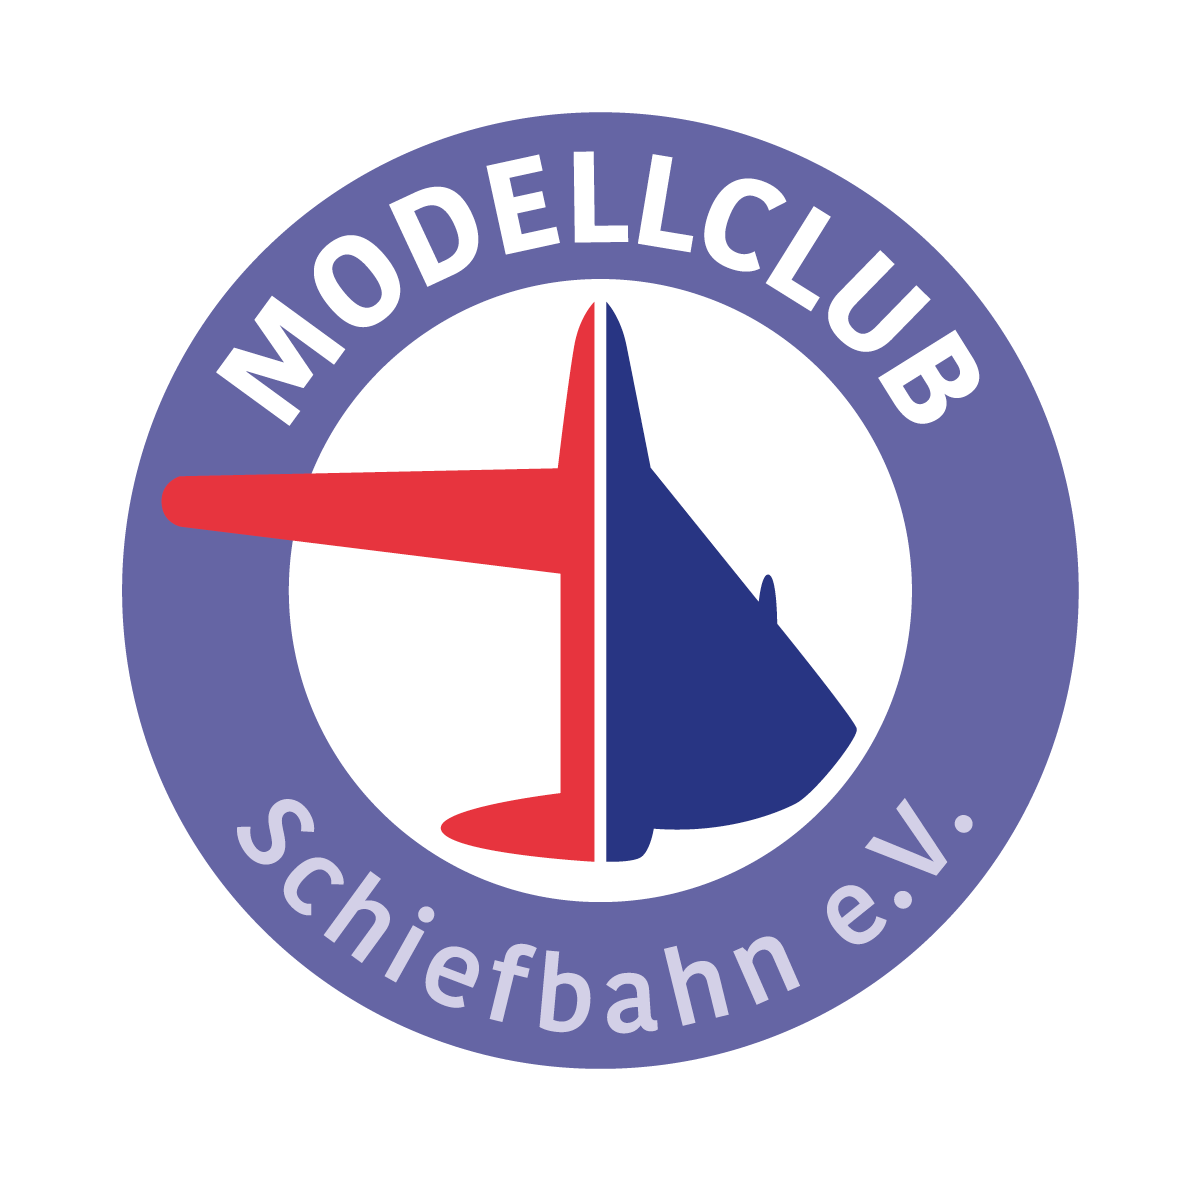 Modellclub Schiefbahn e.V.